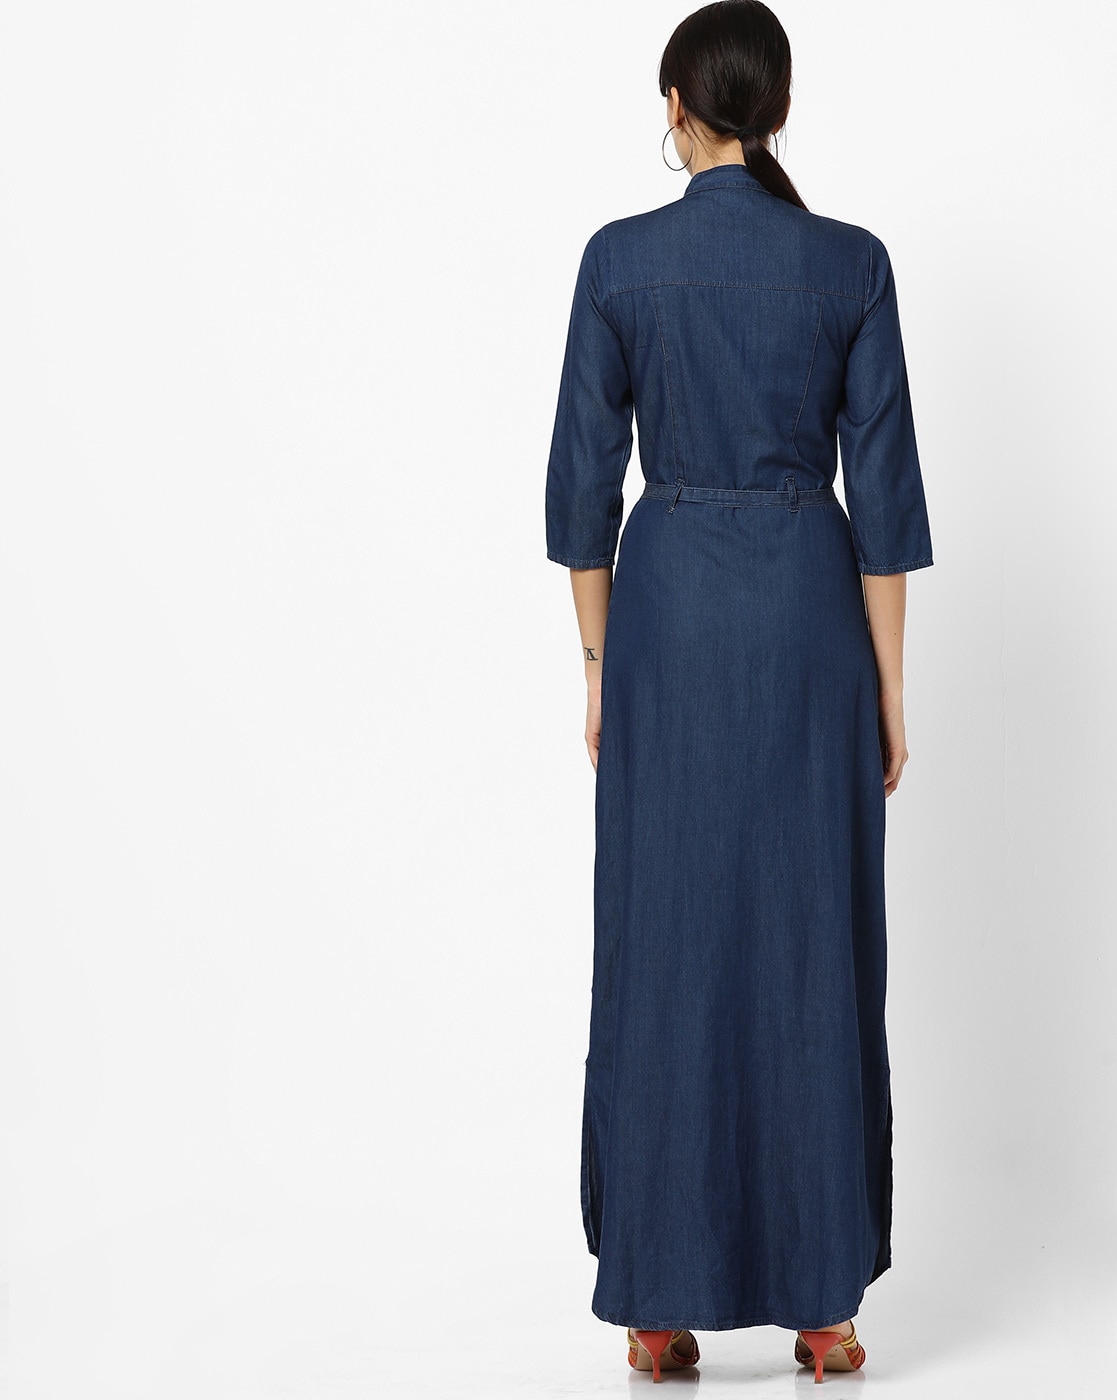 Denim Midi Dress - Buy Denim Midi Dress online at Best Prices in India |  Flipkart.com